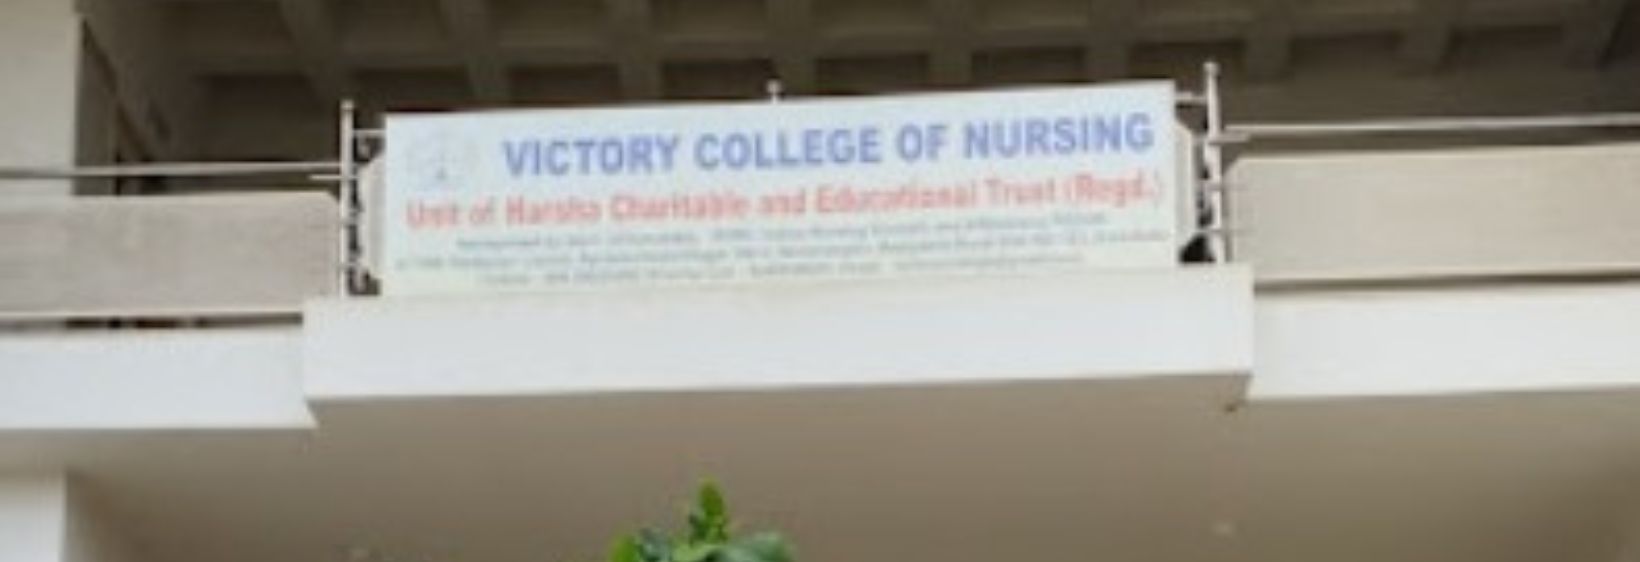 Victory College of Nursing - Bangalore